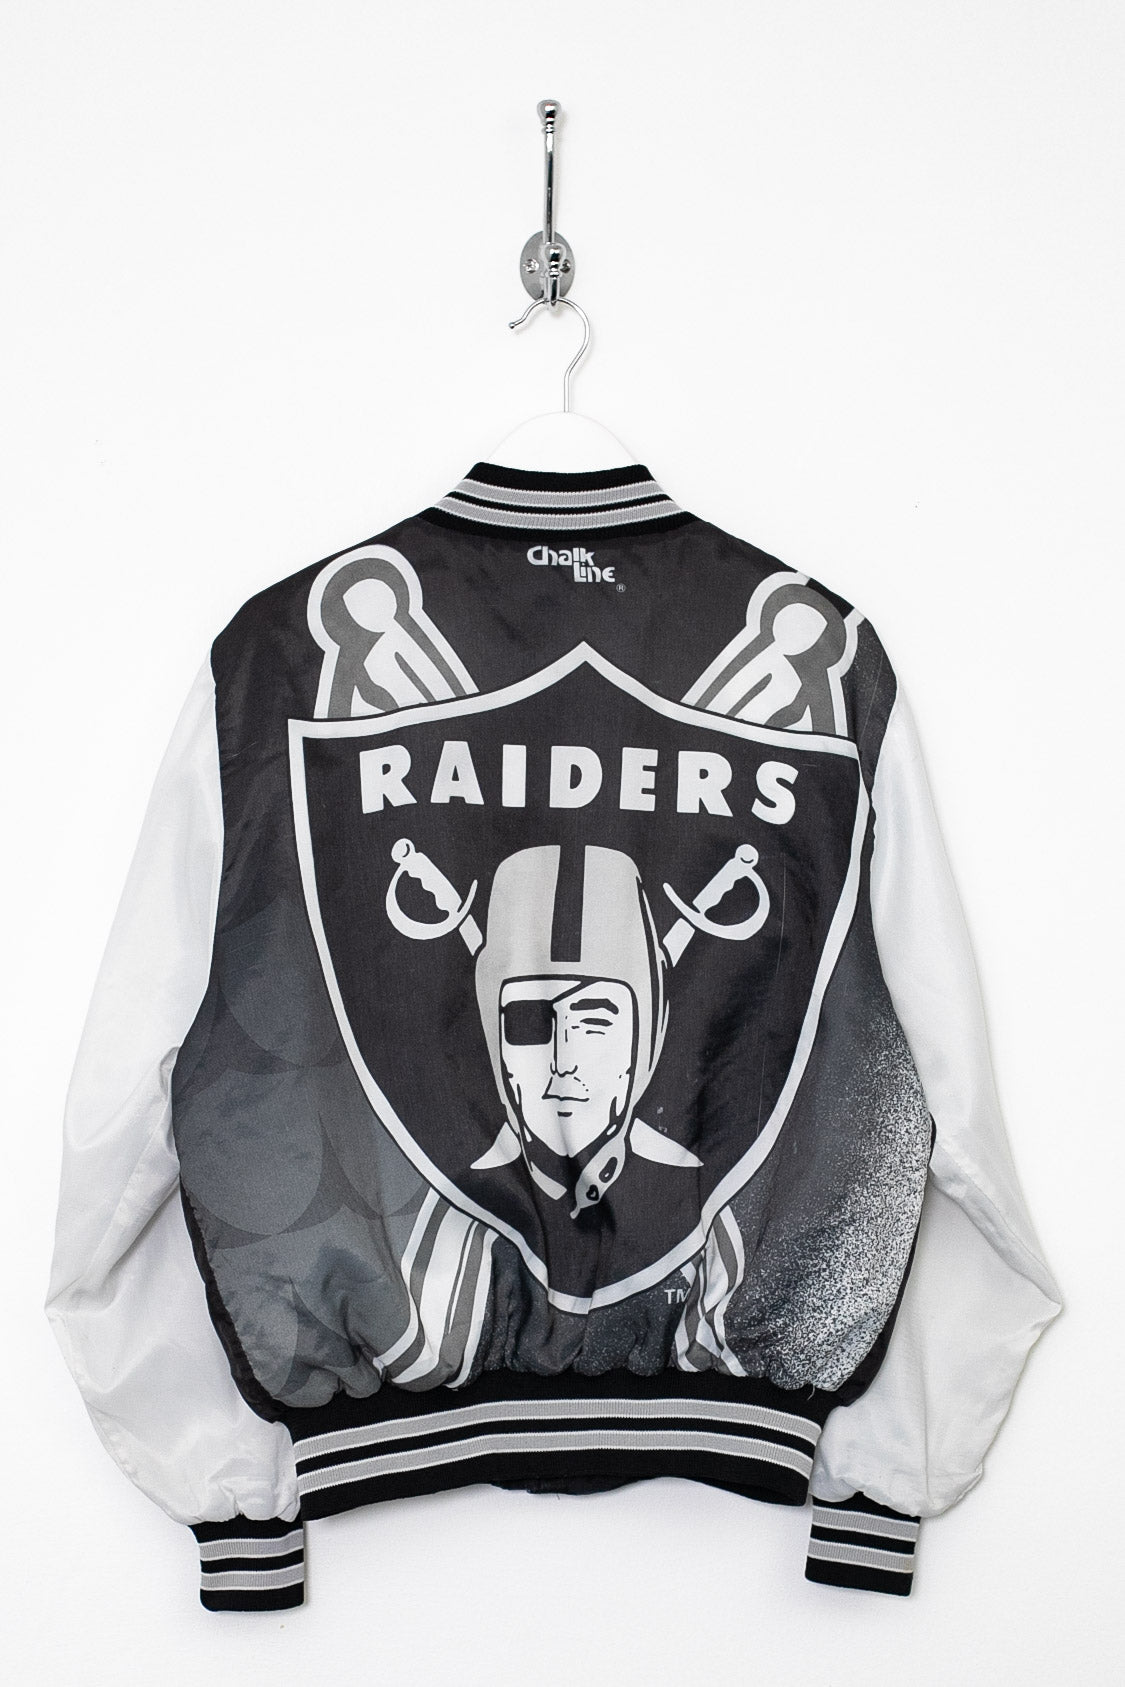 Rare 90s Chalk Line NFL Raiders Jacket (S)